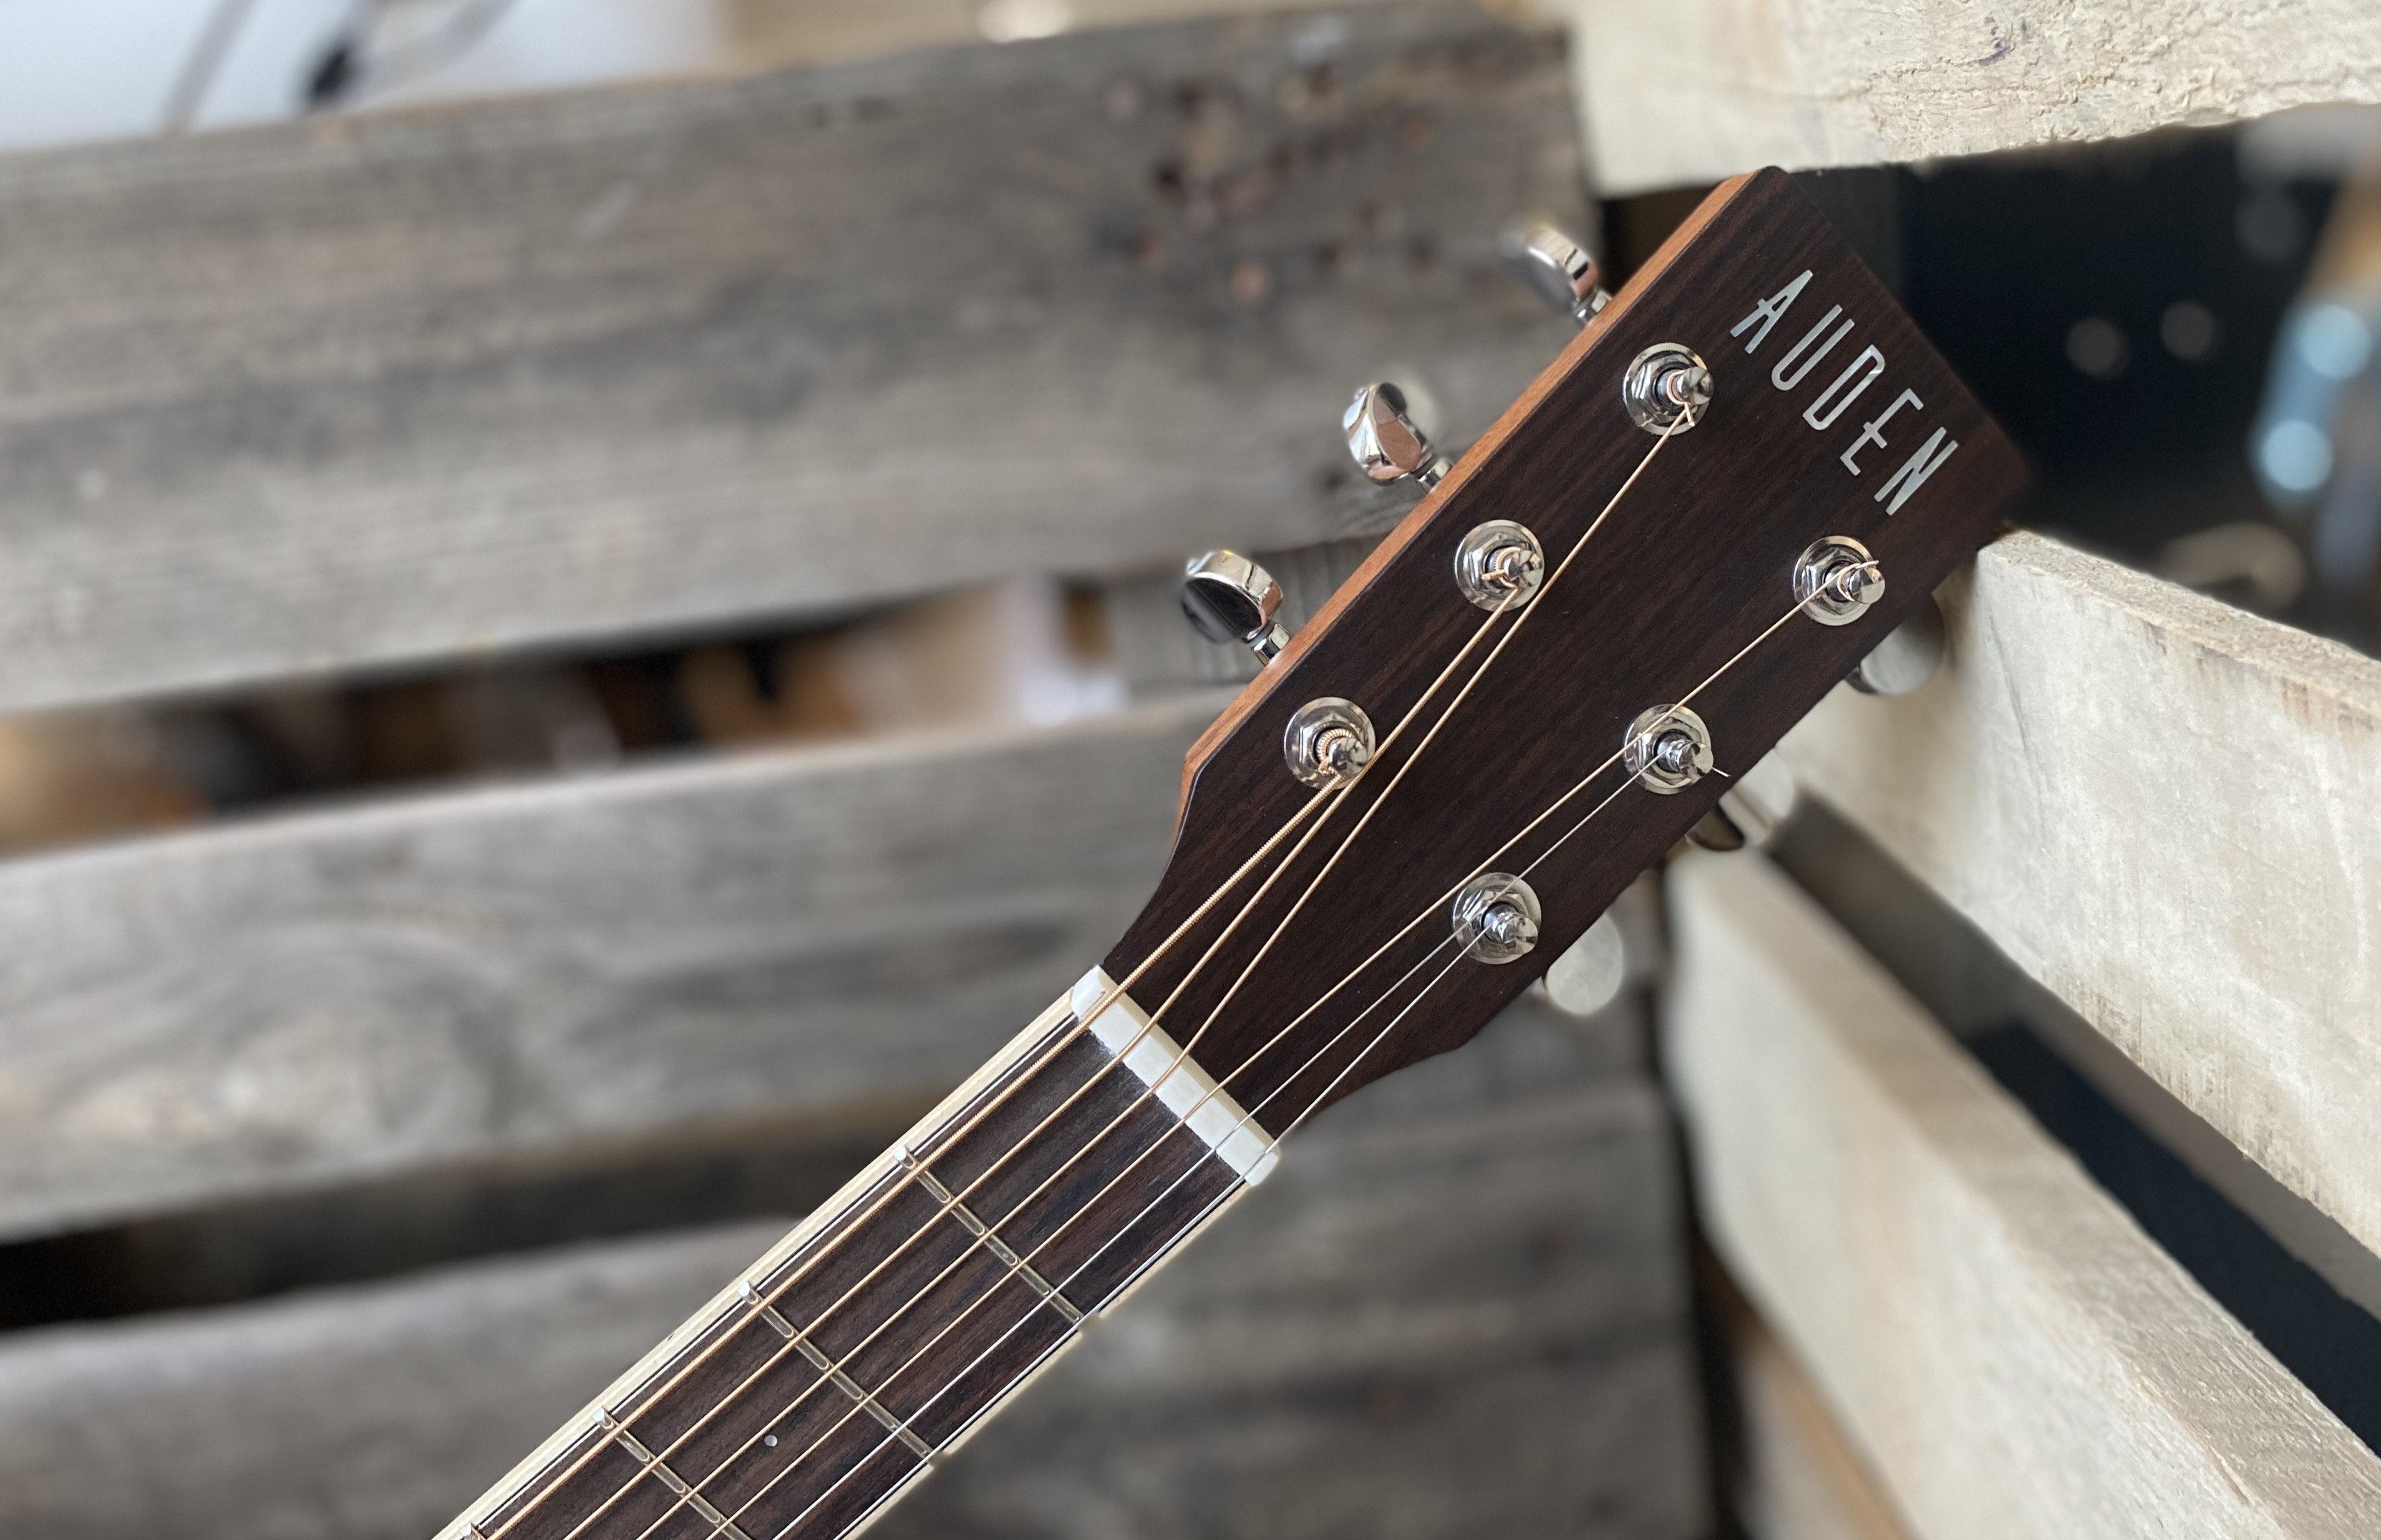 Auden Neo Colton, Electro Acoustic Guitar for sale at Richards Guitars.